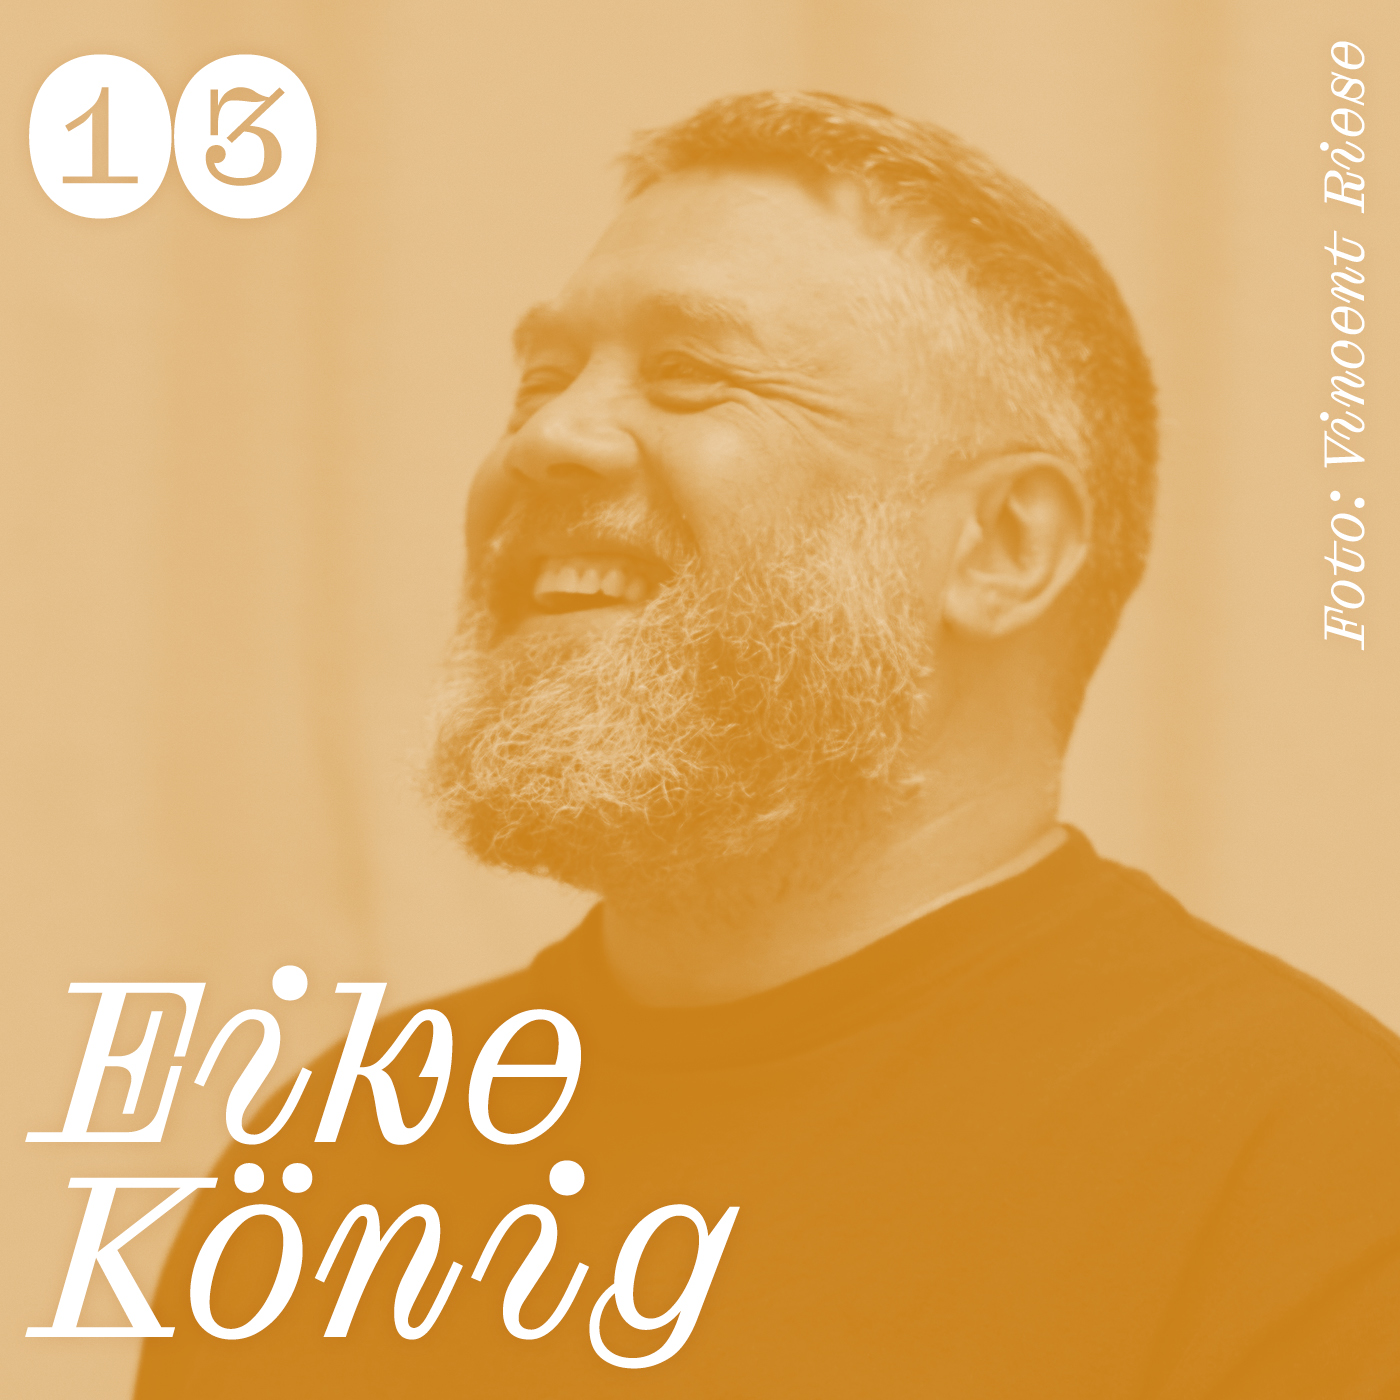 Chapter Talks E13 | Eike König (Grafikdesigner & Künstler)